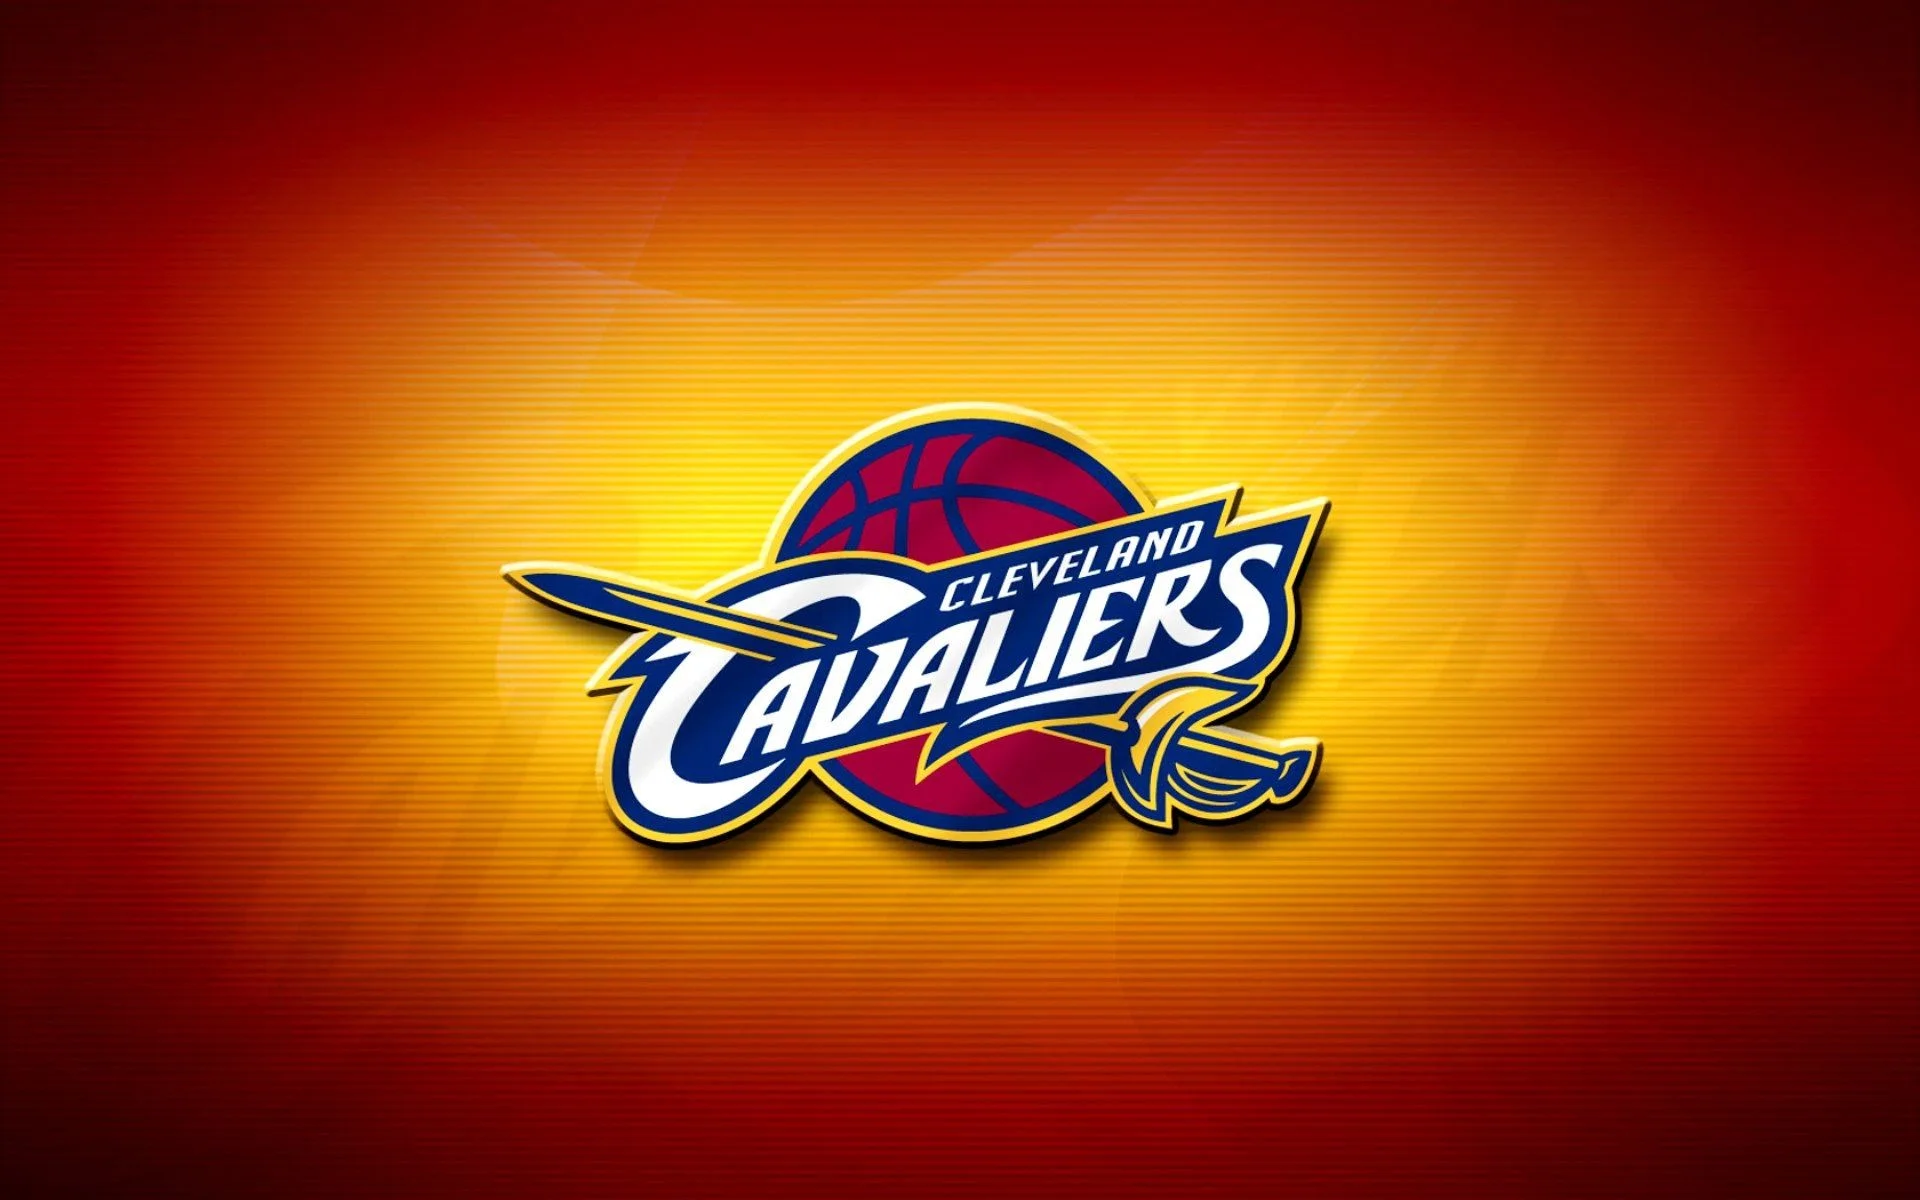 Cleveland Cavaliers Logo Wallpaper Basketball Team | NBA to Days .